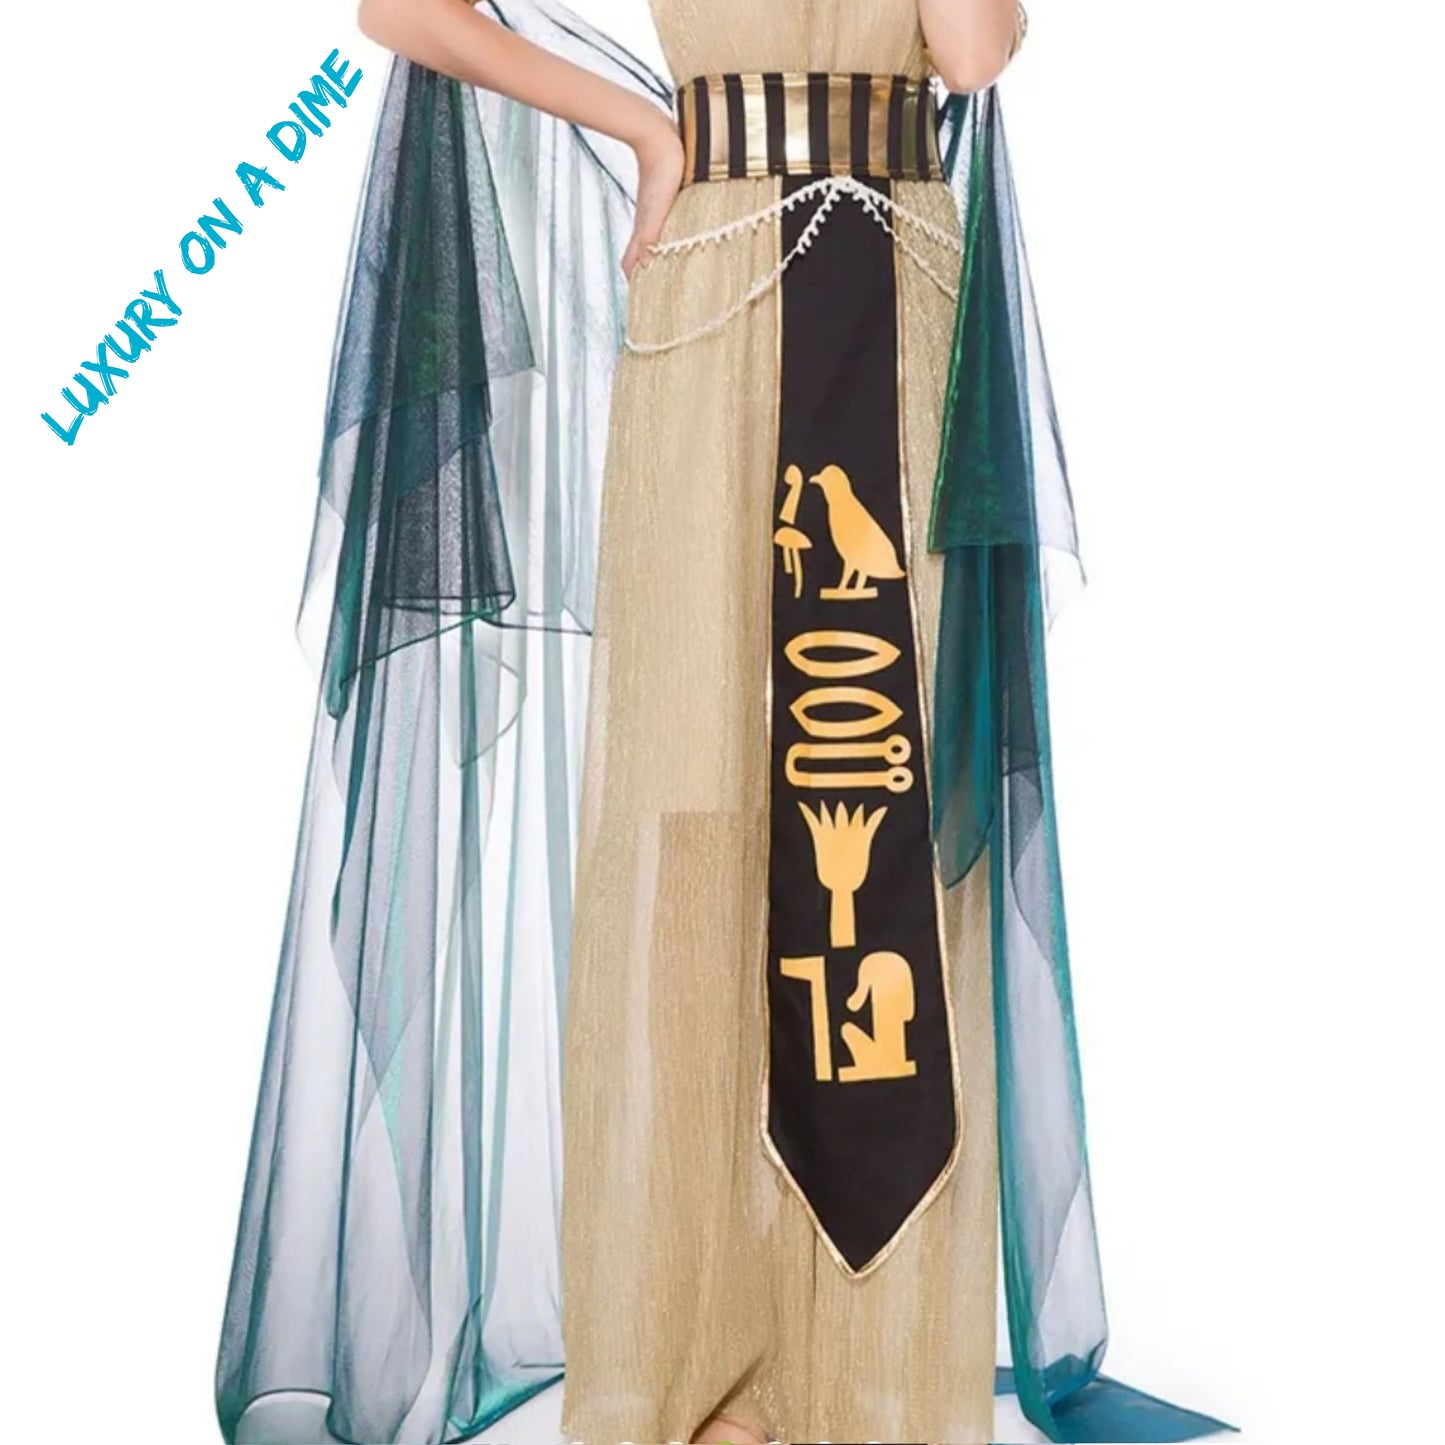 EGYPTIAN Goddess Queen Sexy Adult Women Halloween Costume Cosplay 5-piece set